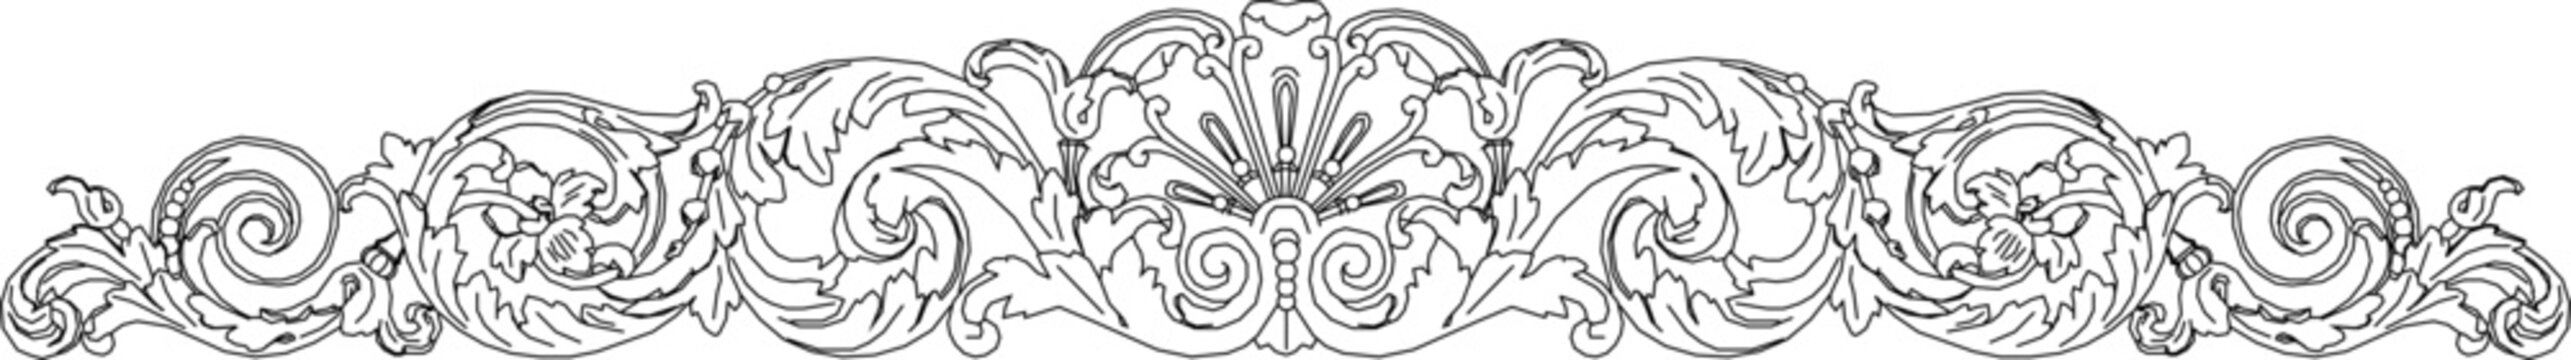 Sketch vector illustration design ornamental classical vintage ethnic floral traditional roman motif